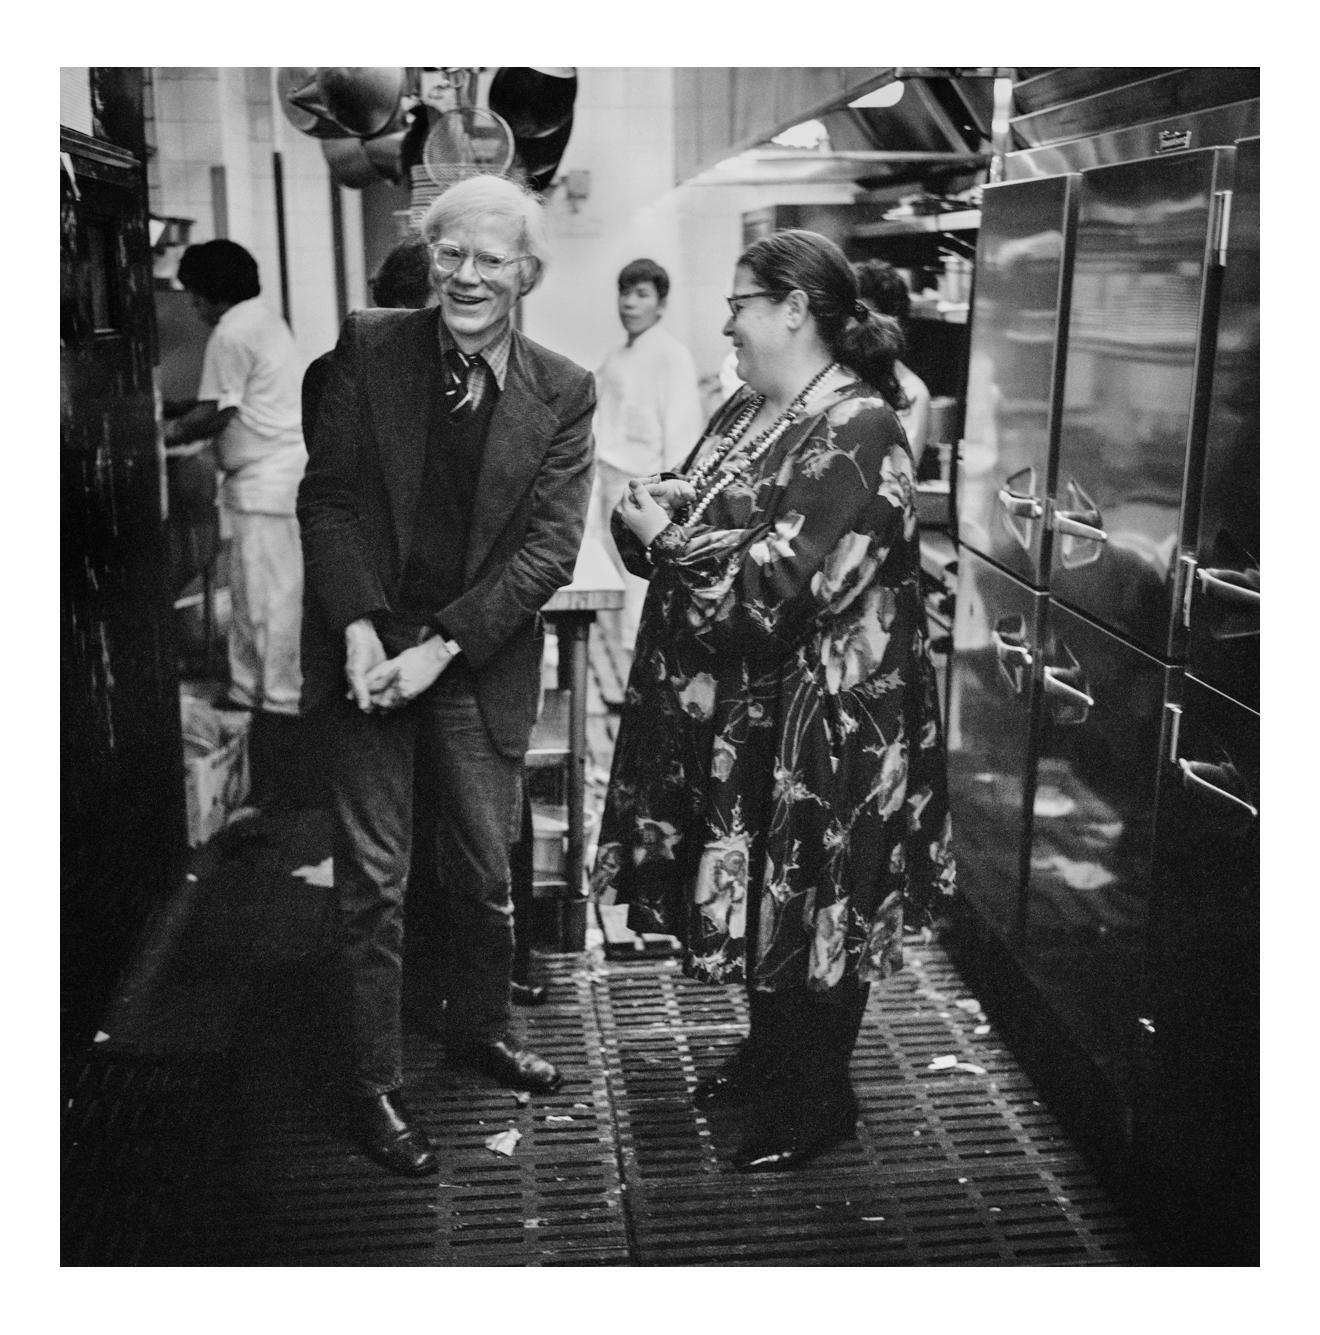 Jonathan Becker Portrait Photograph - Elaine's Kitchen - Andy Warhol and Elaine, New York, 1976